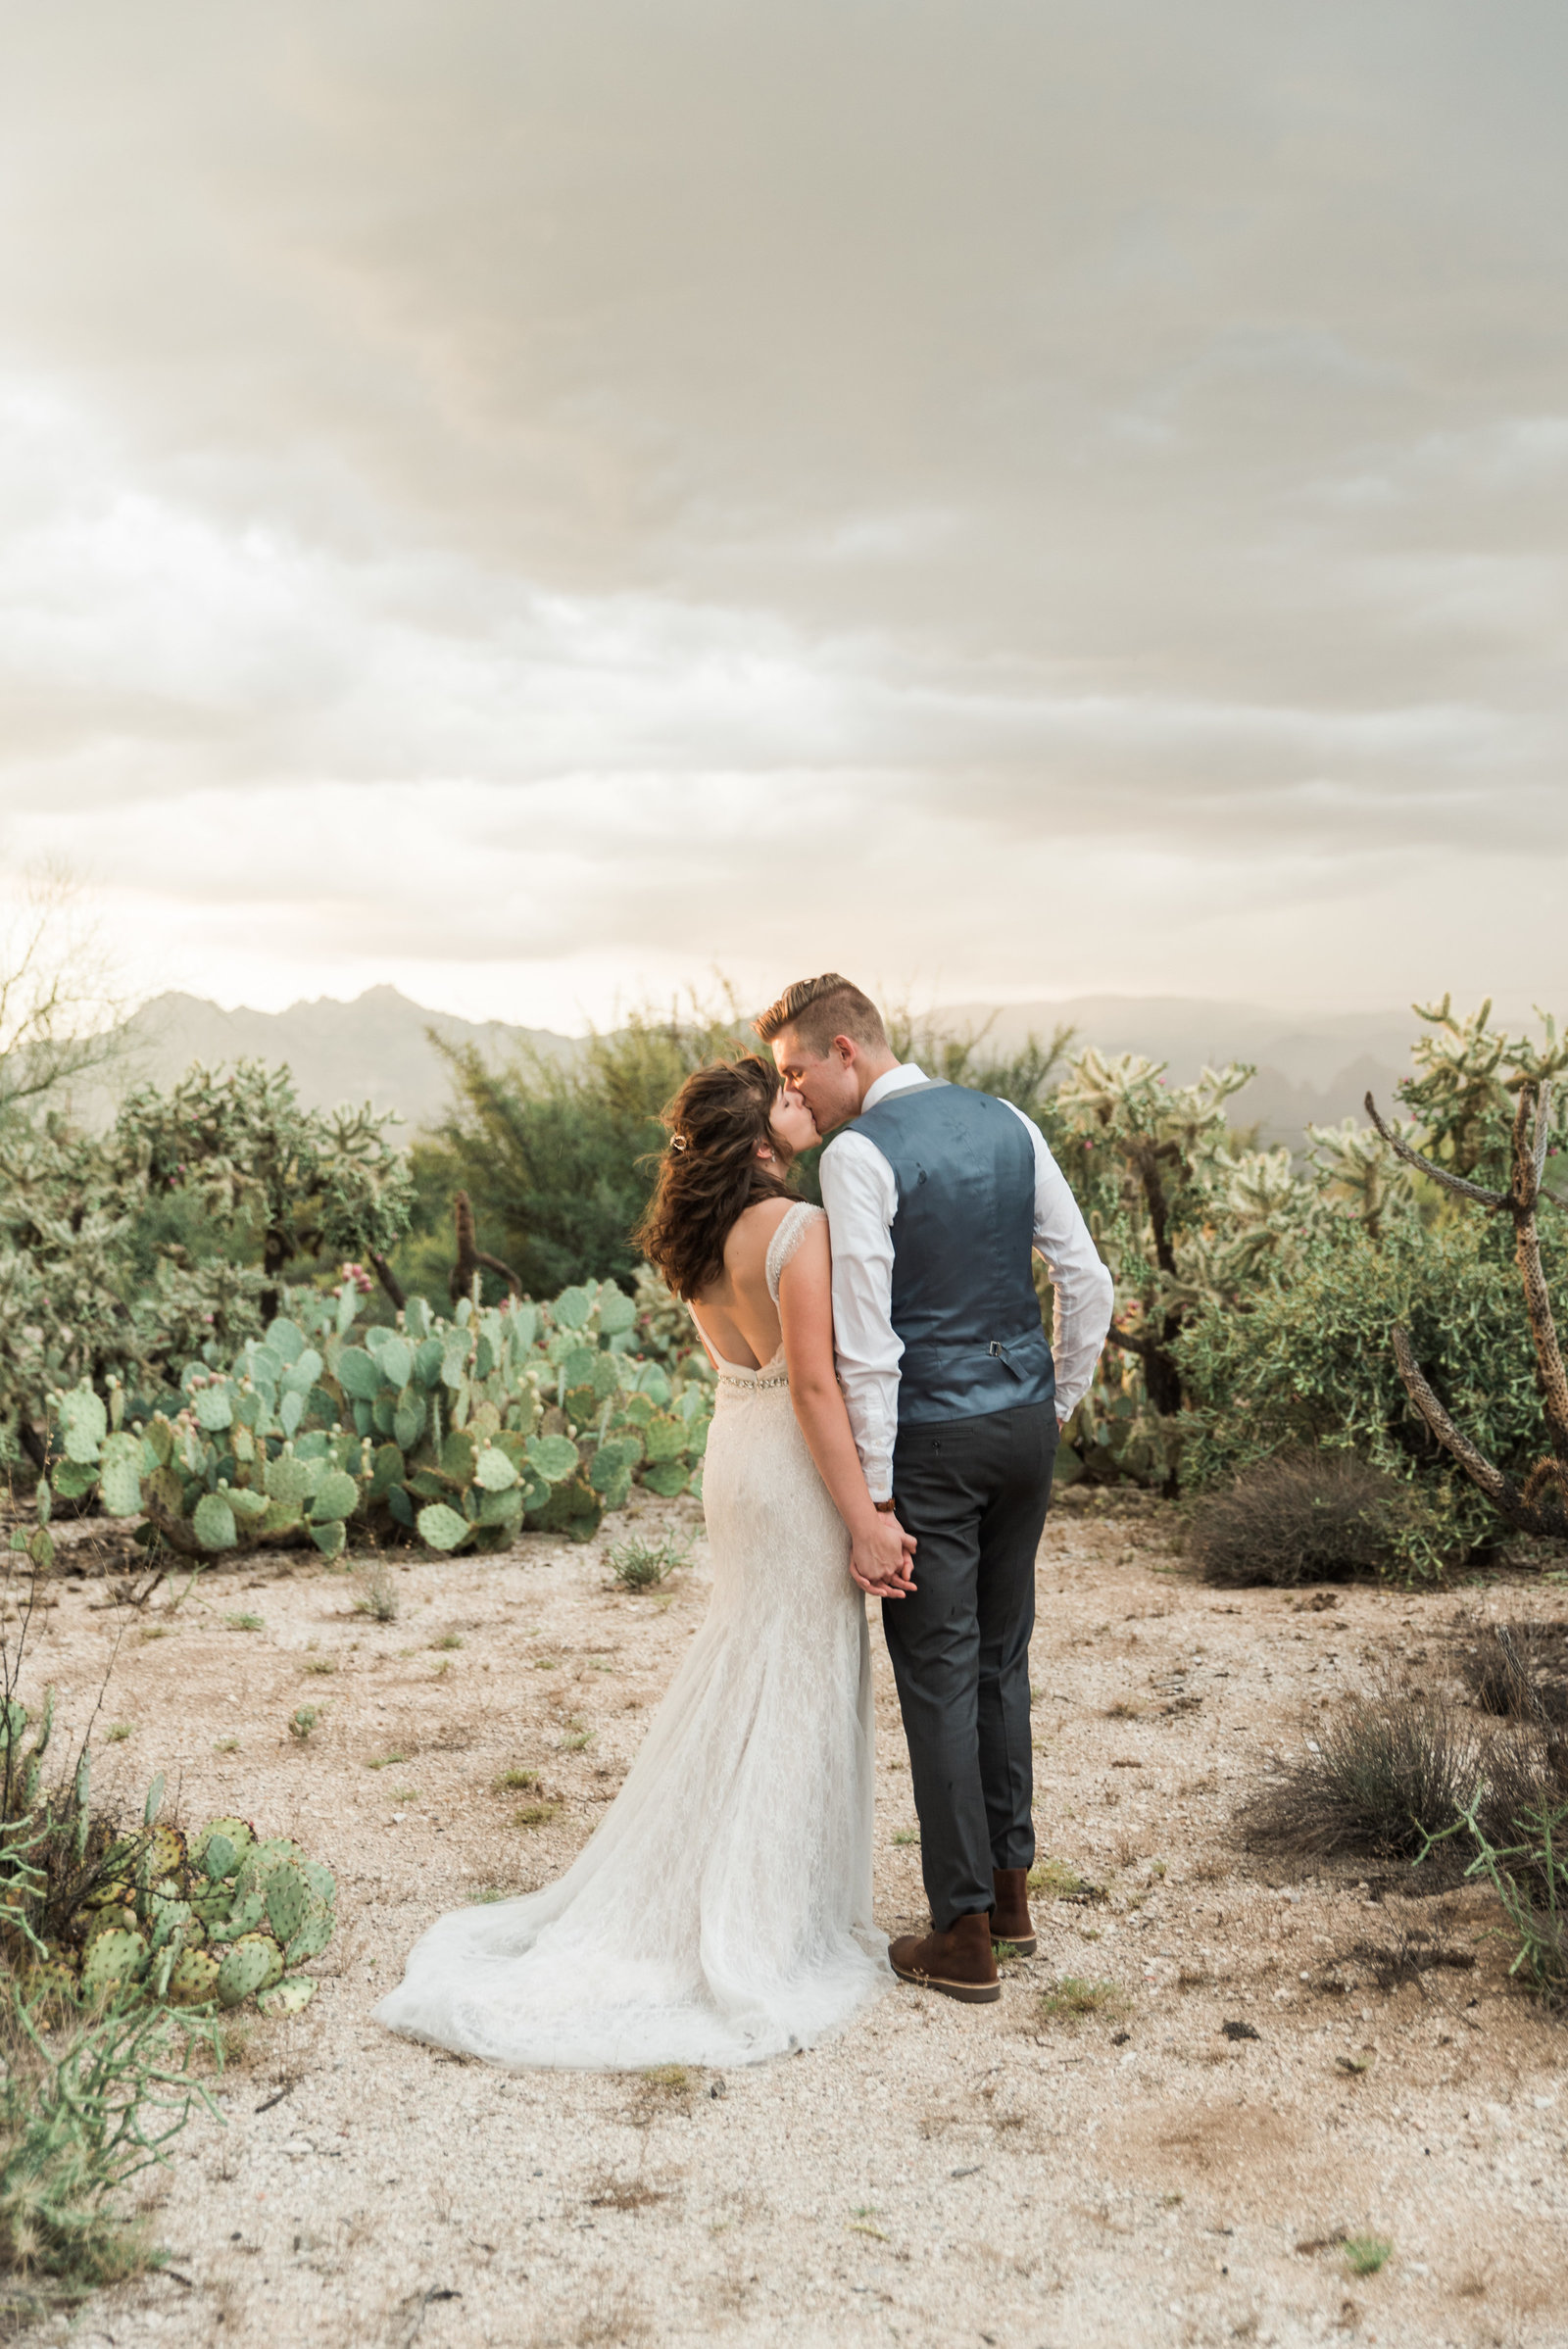 Classic Tucson Saguaro Buttes Desert Wedding Photo | Tucson Wedding Photographer | West End Photography